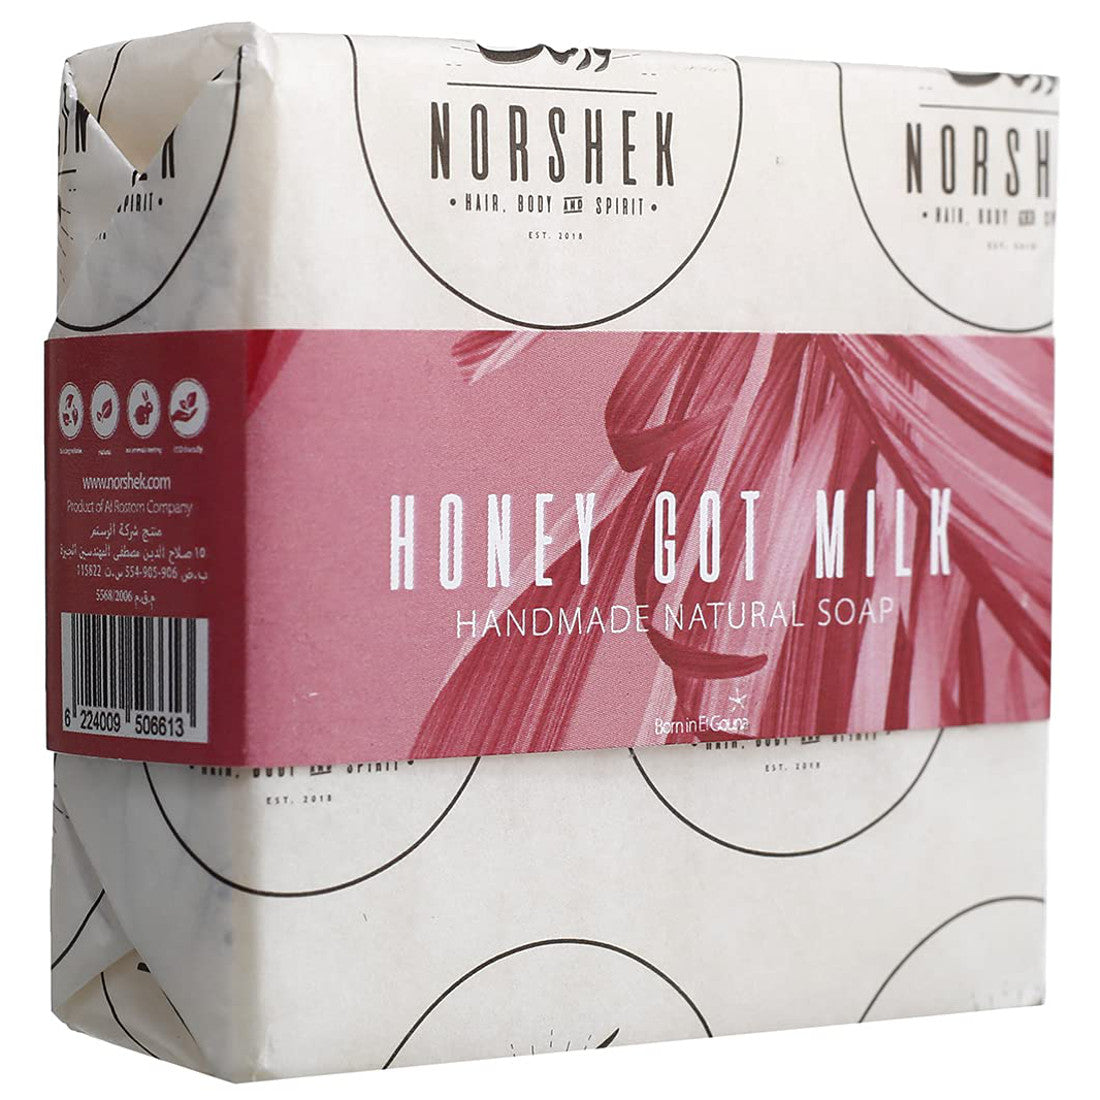 Norshek Honey Got Milk | Bar Soap